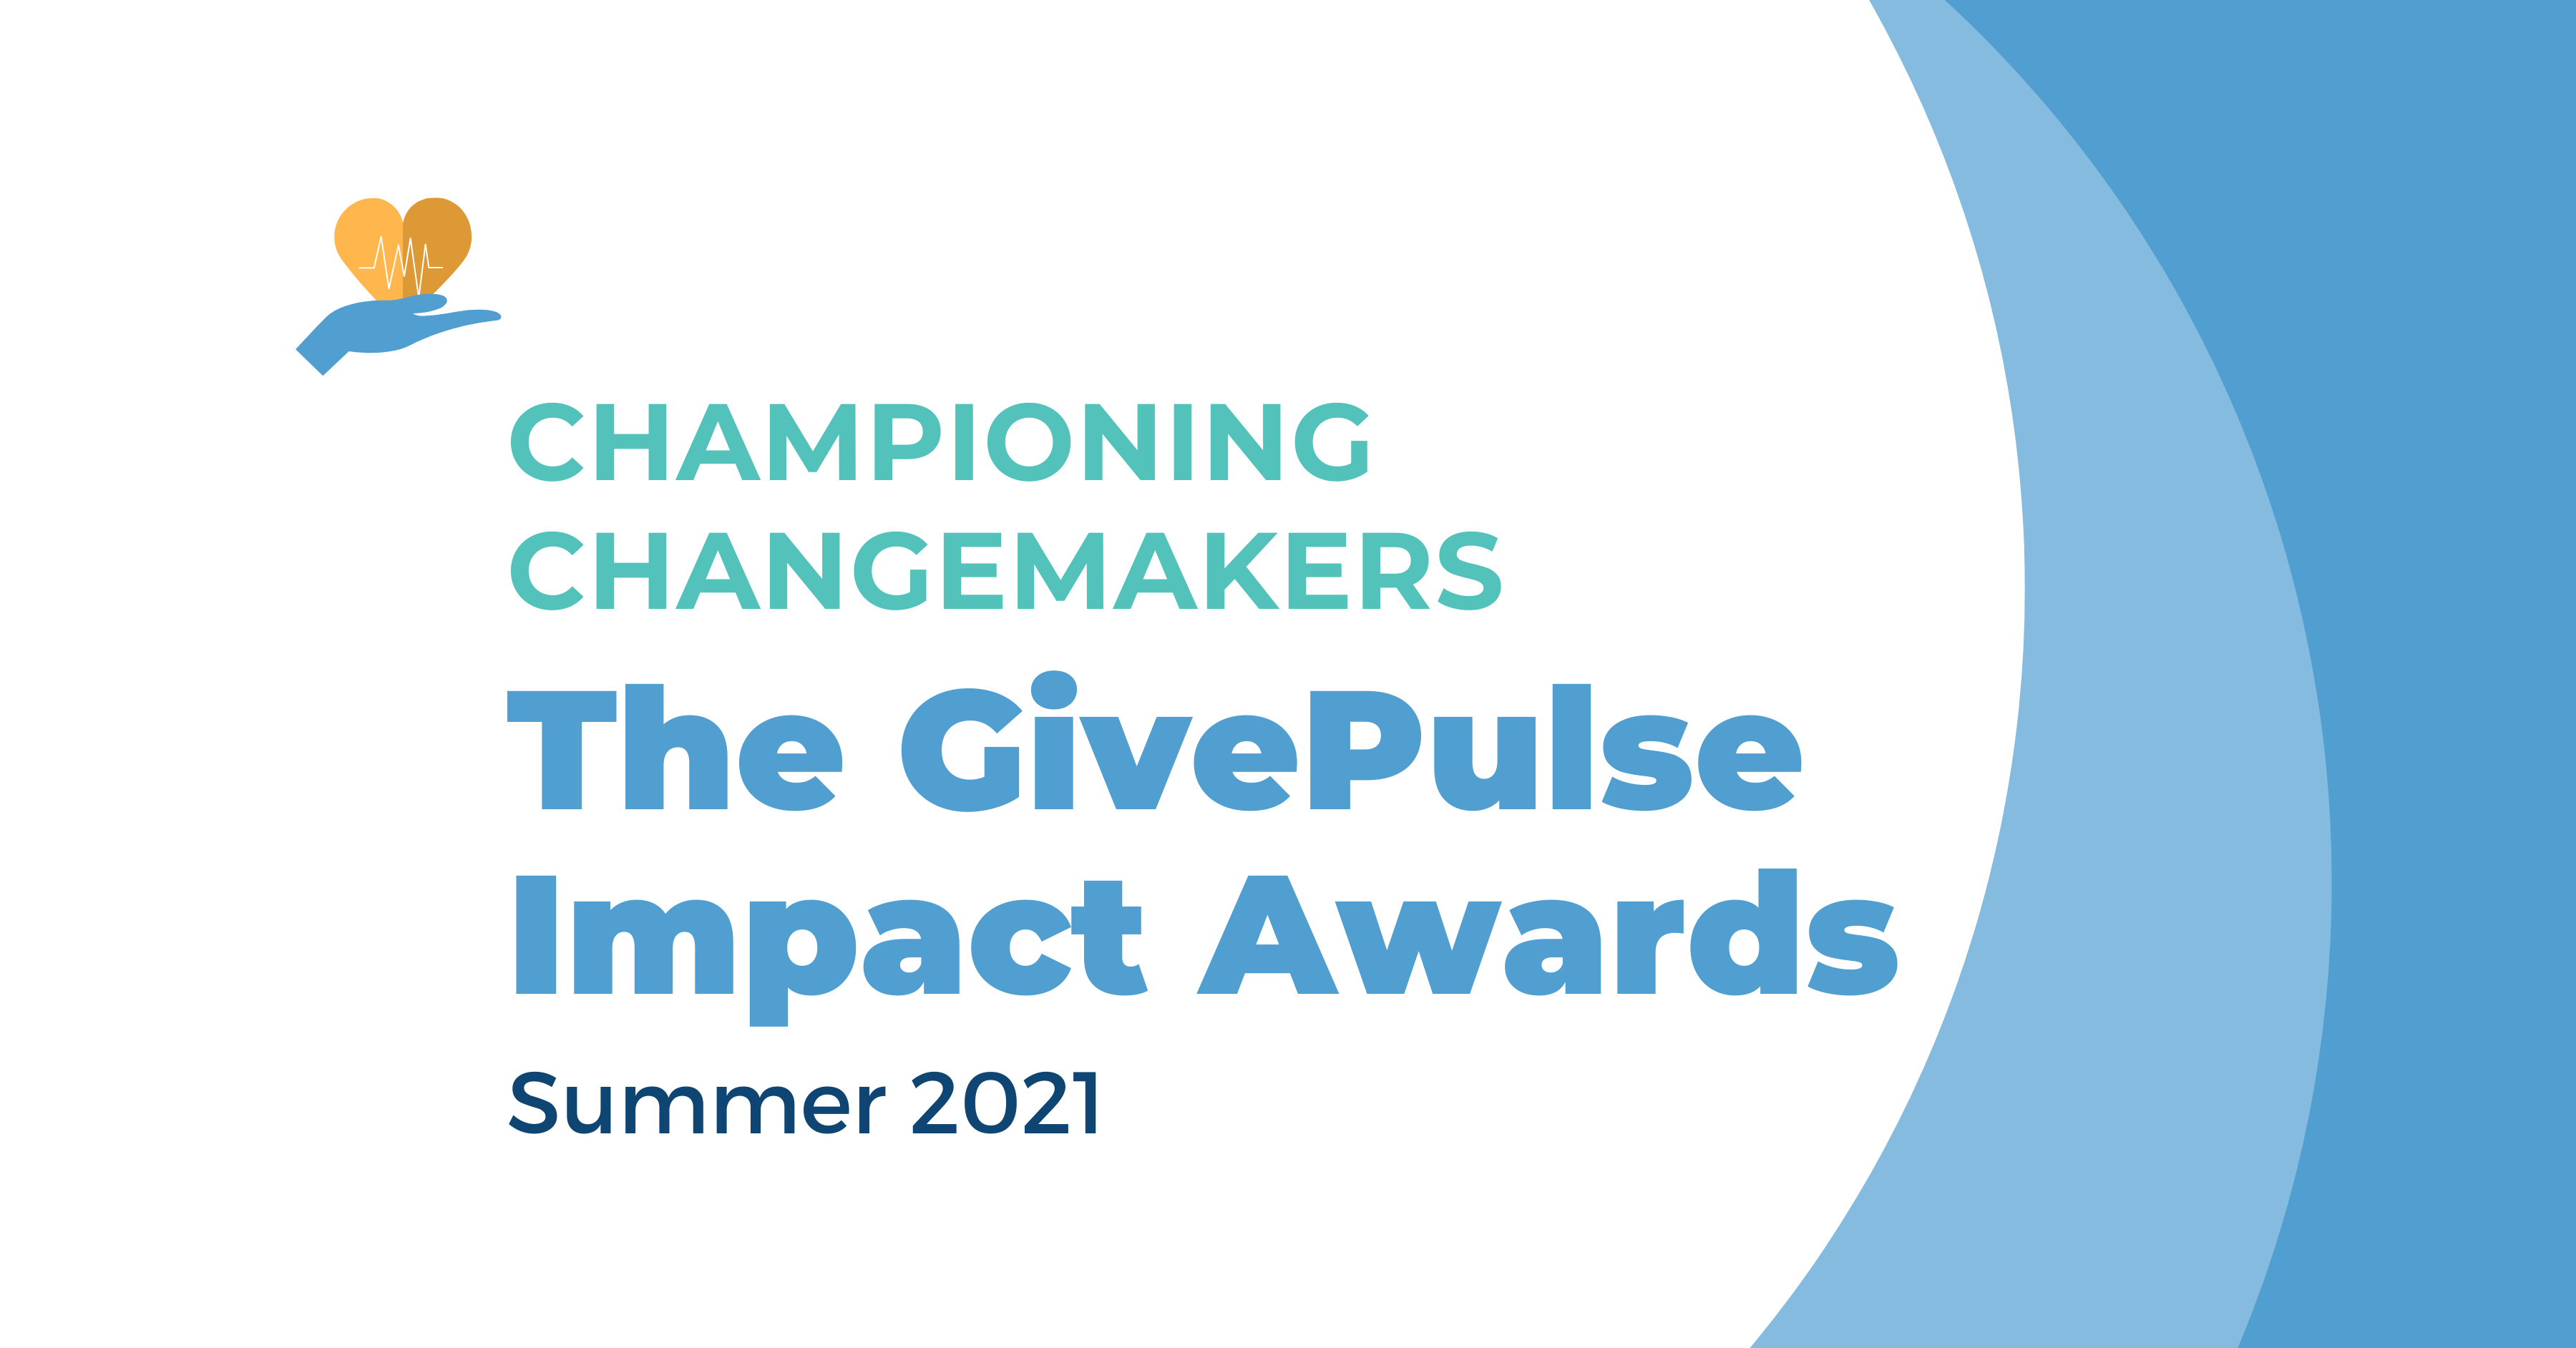 The GivePulse Impact Awards, Summer 2021 